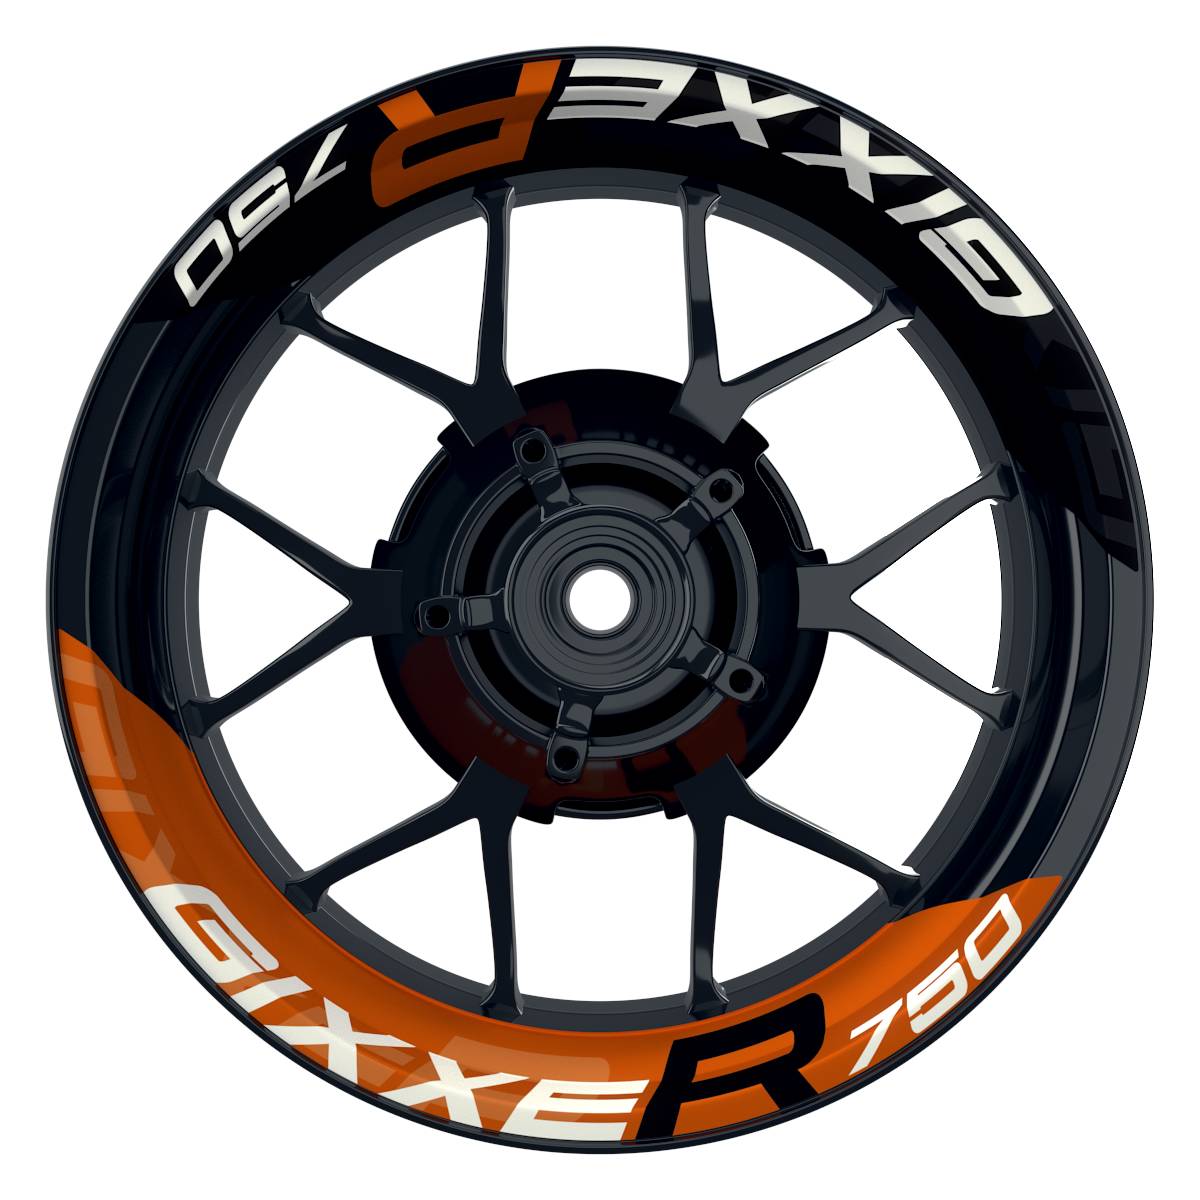 Wheelsticker Felgenaufkleber GIXXER750 halb halb V2 schwarz orange Frontansicht